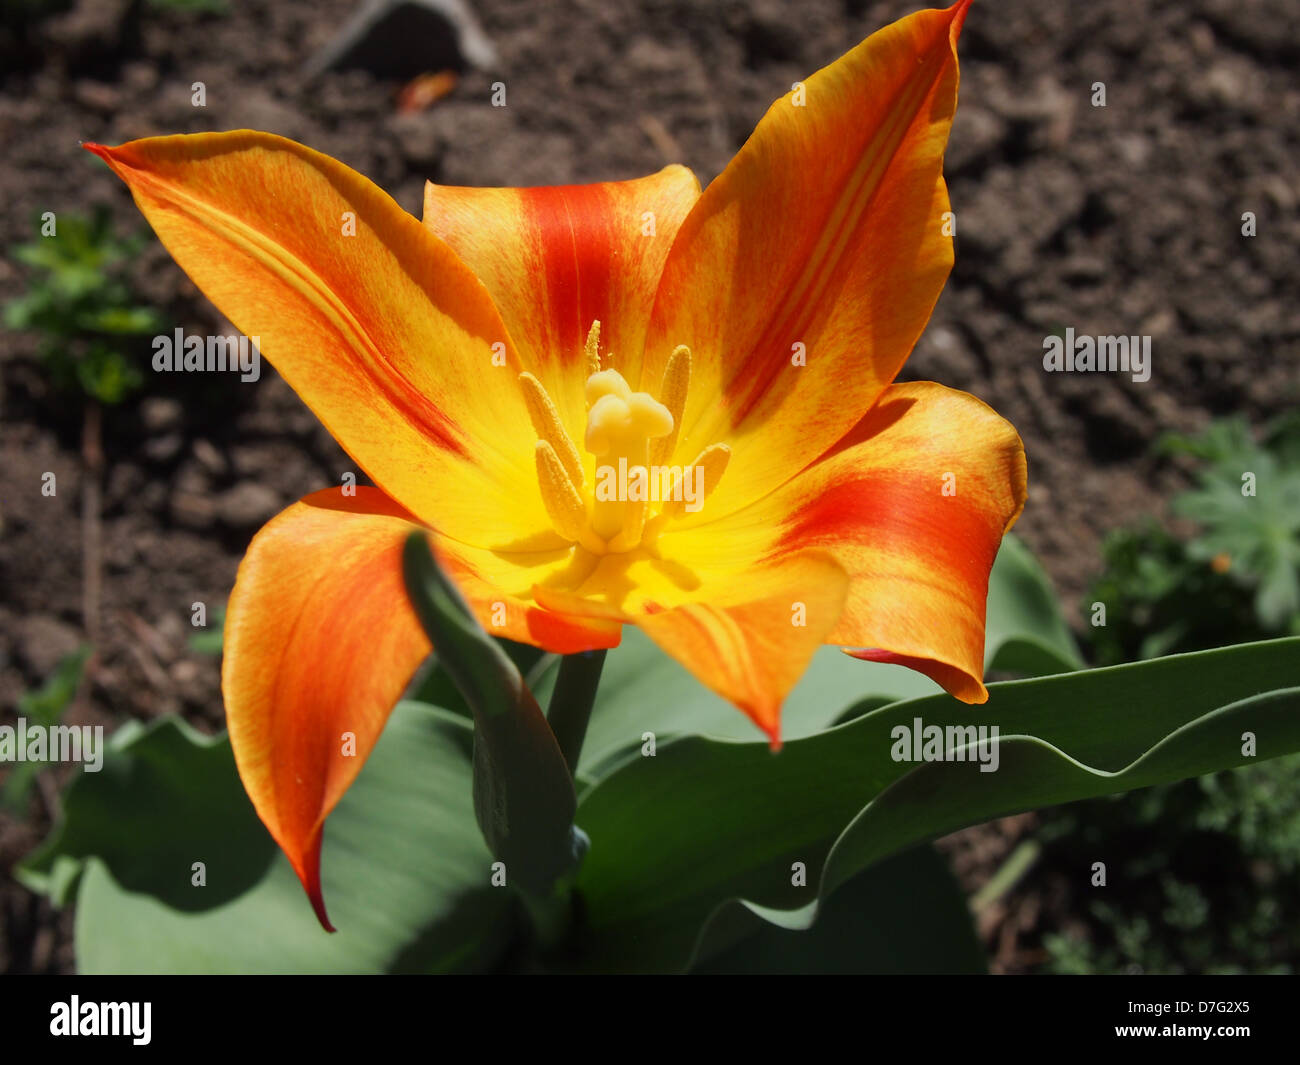 reproductive organs of orange tulip Stock Photo